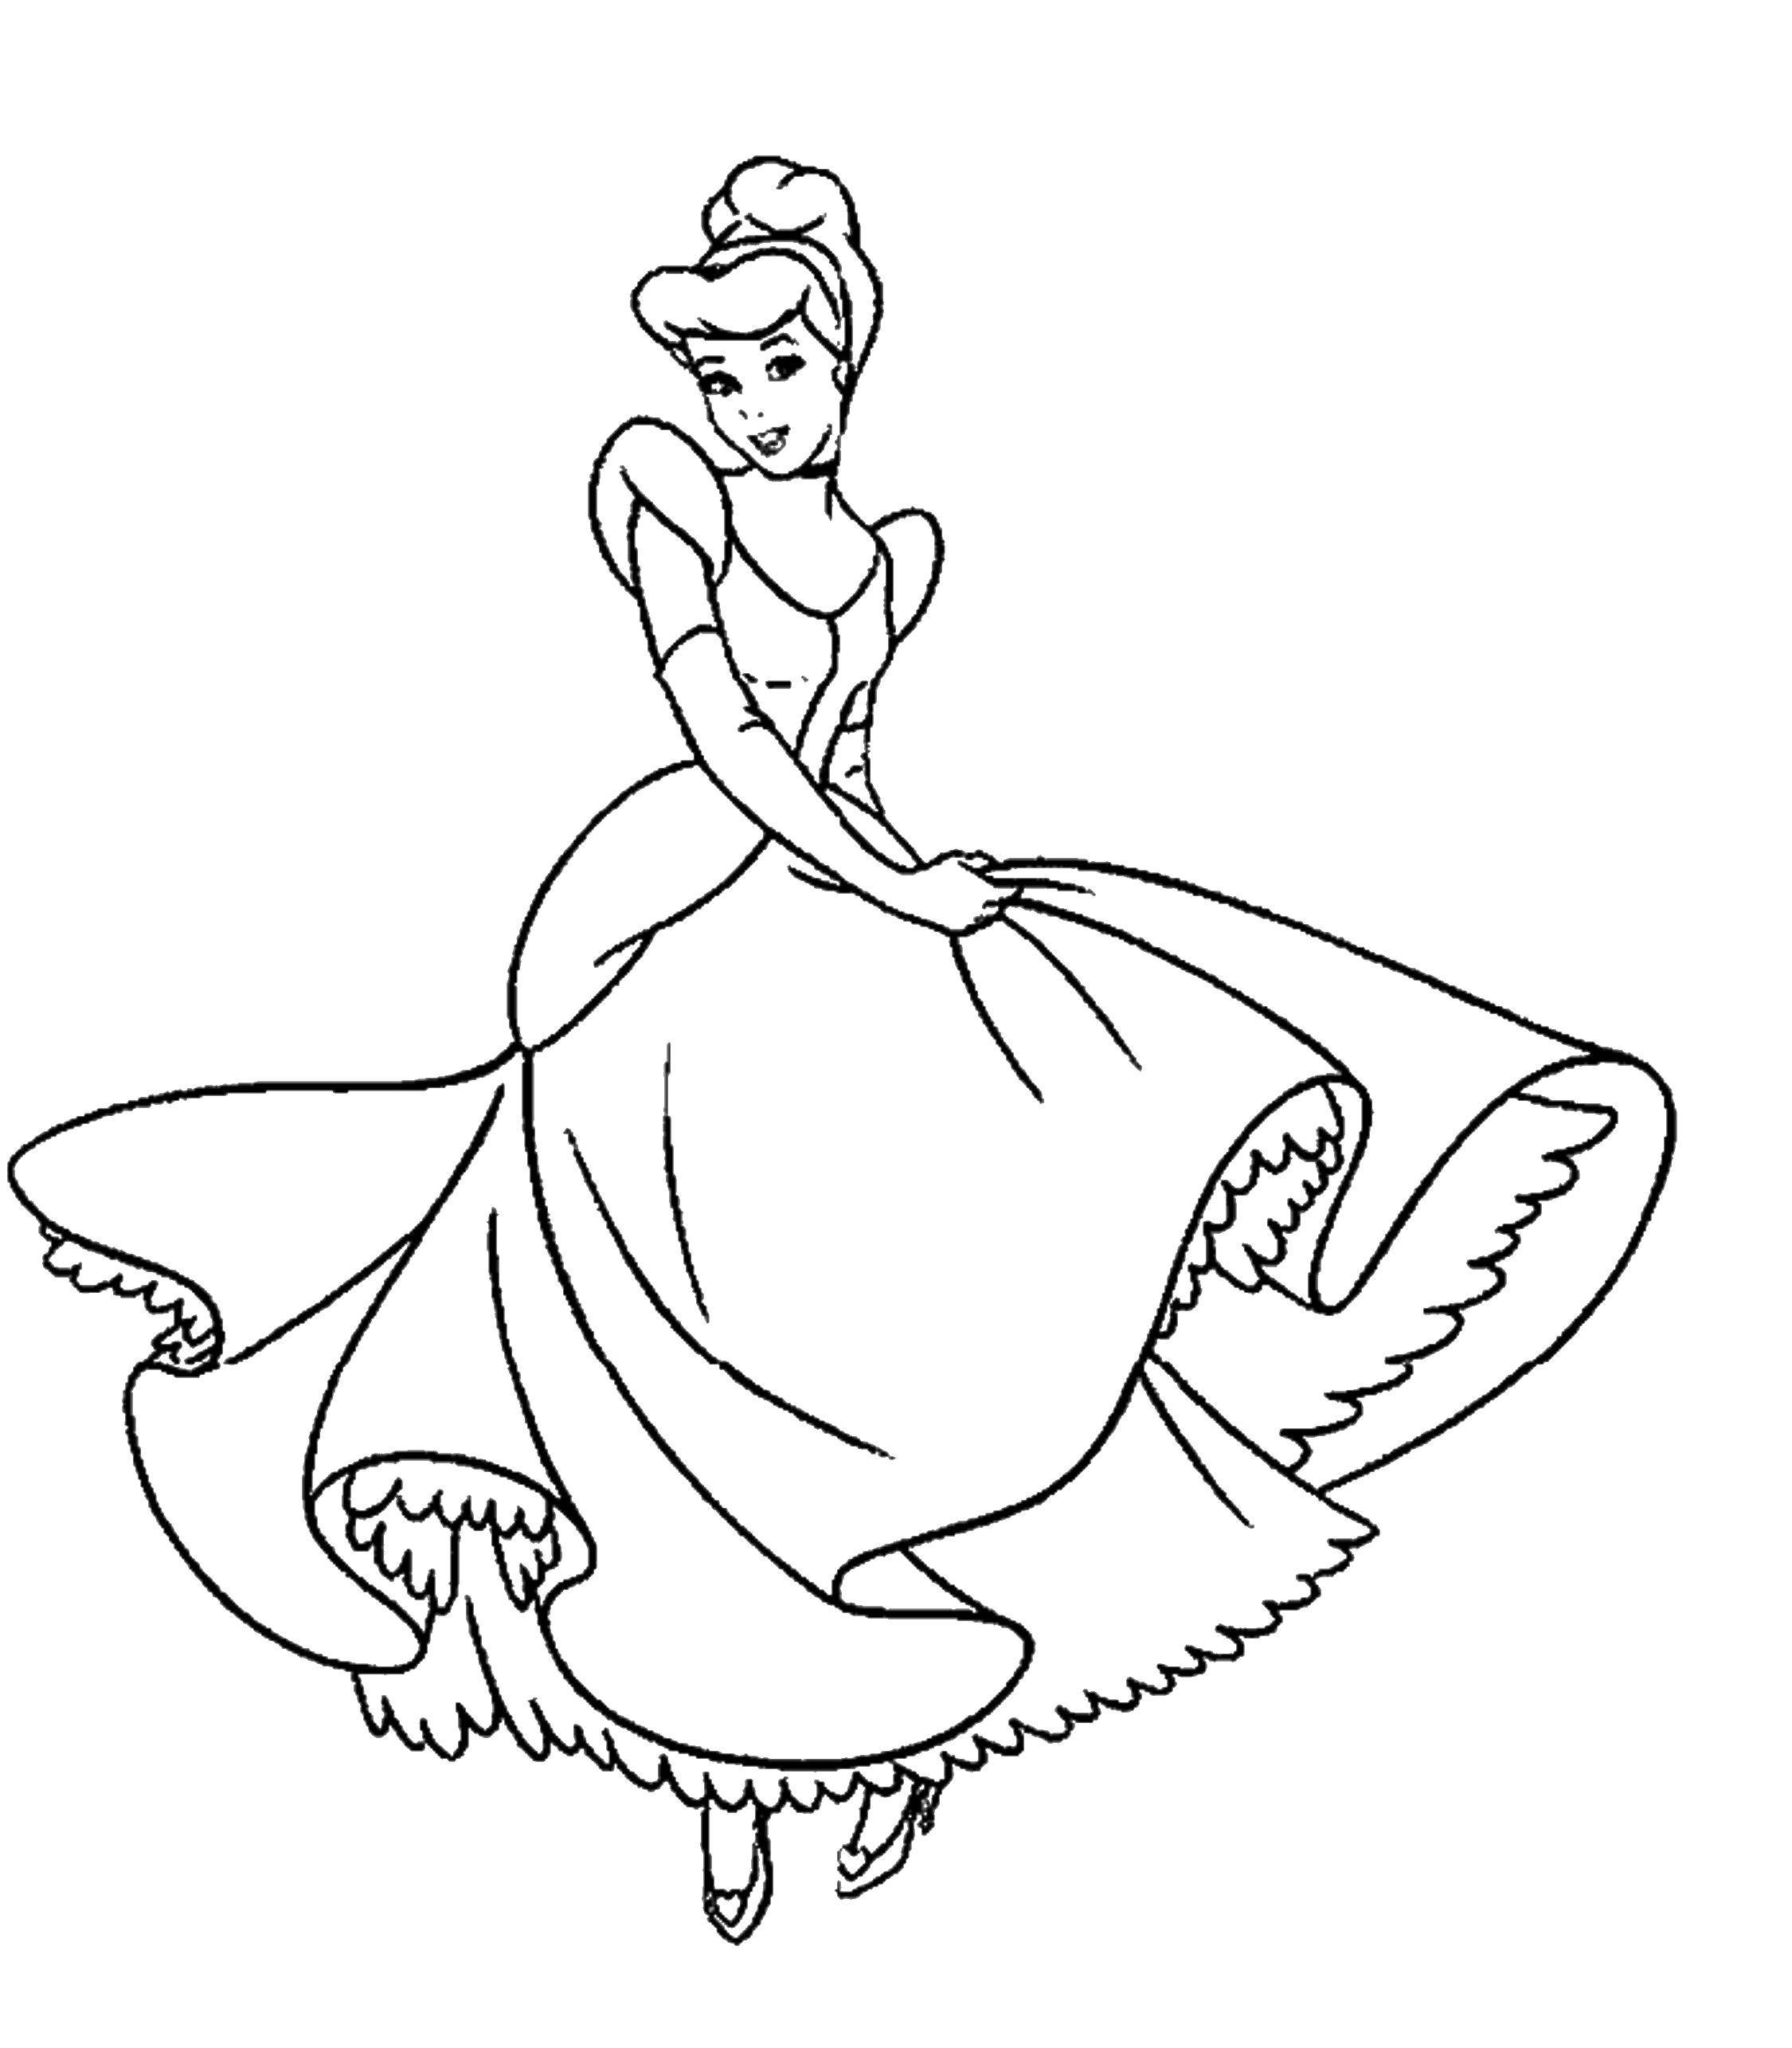 Coloring Cinderella. Category Princess. Tags:  Princess , tale, cartoon, Cinderella.